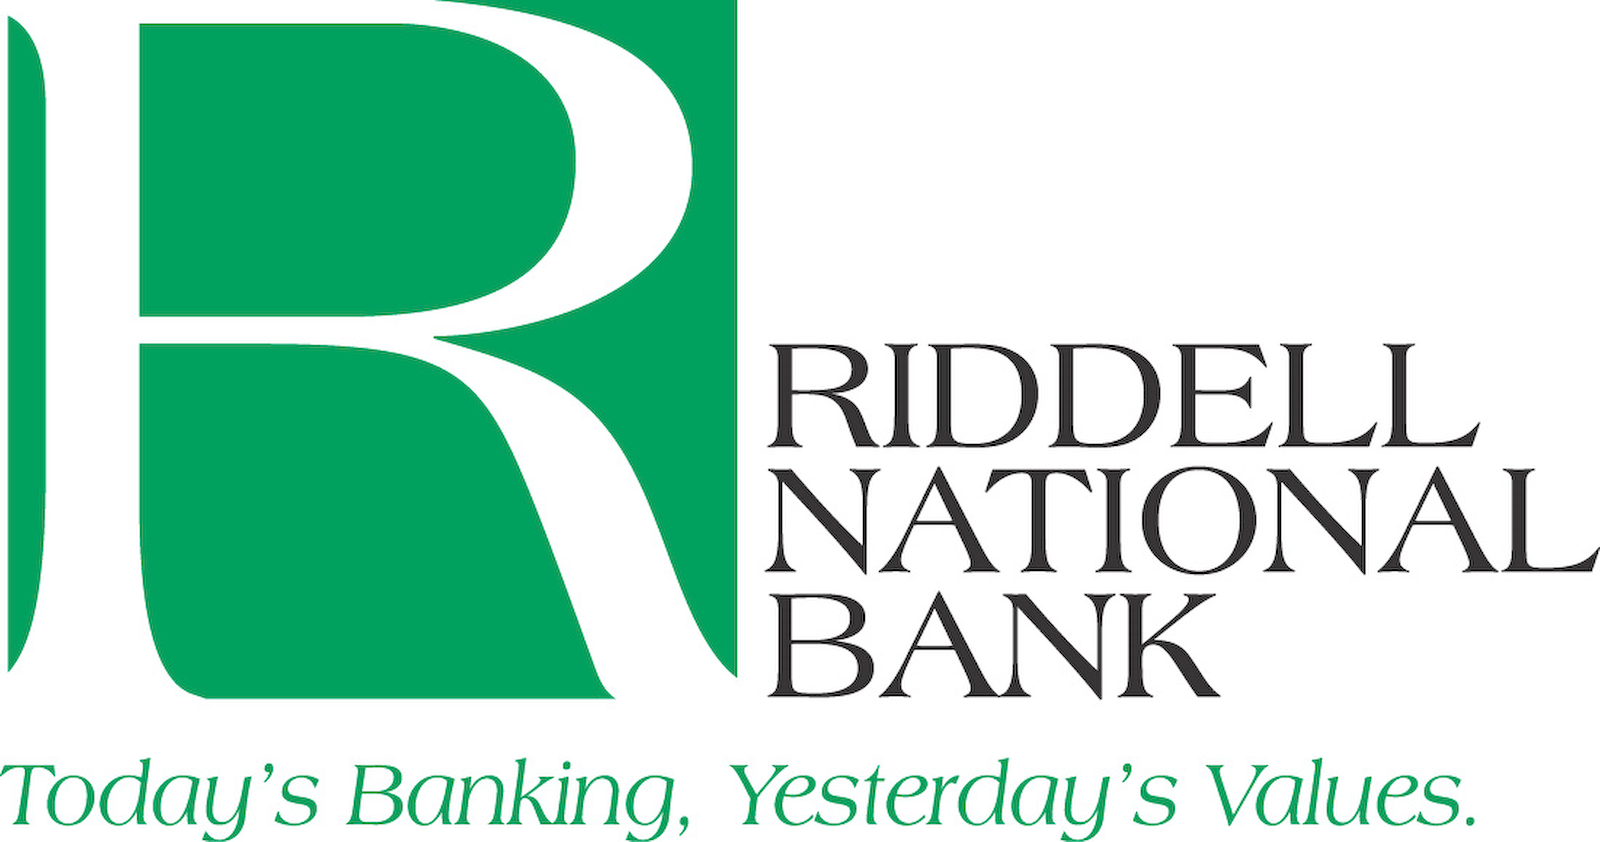 Riddell National Bank